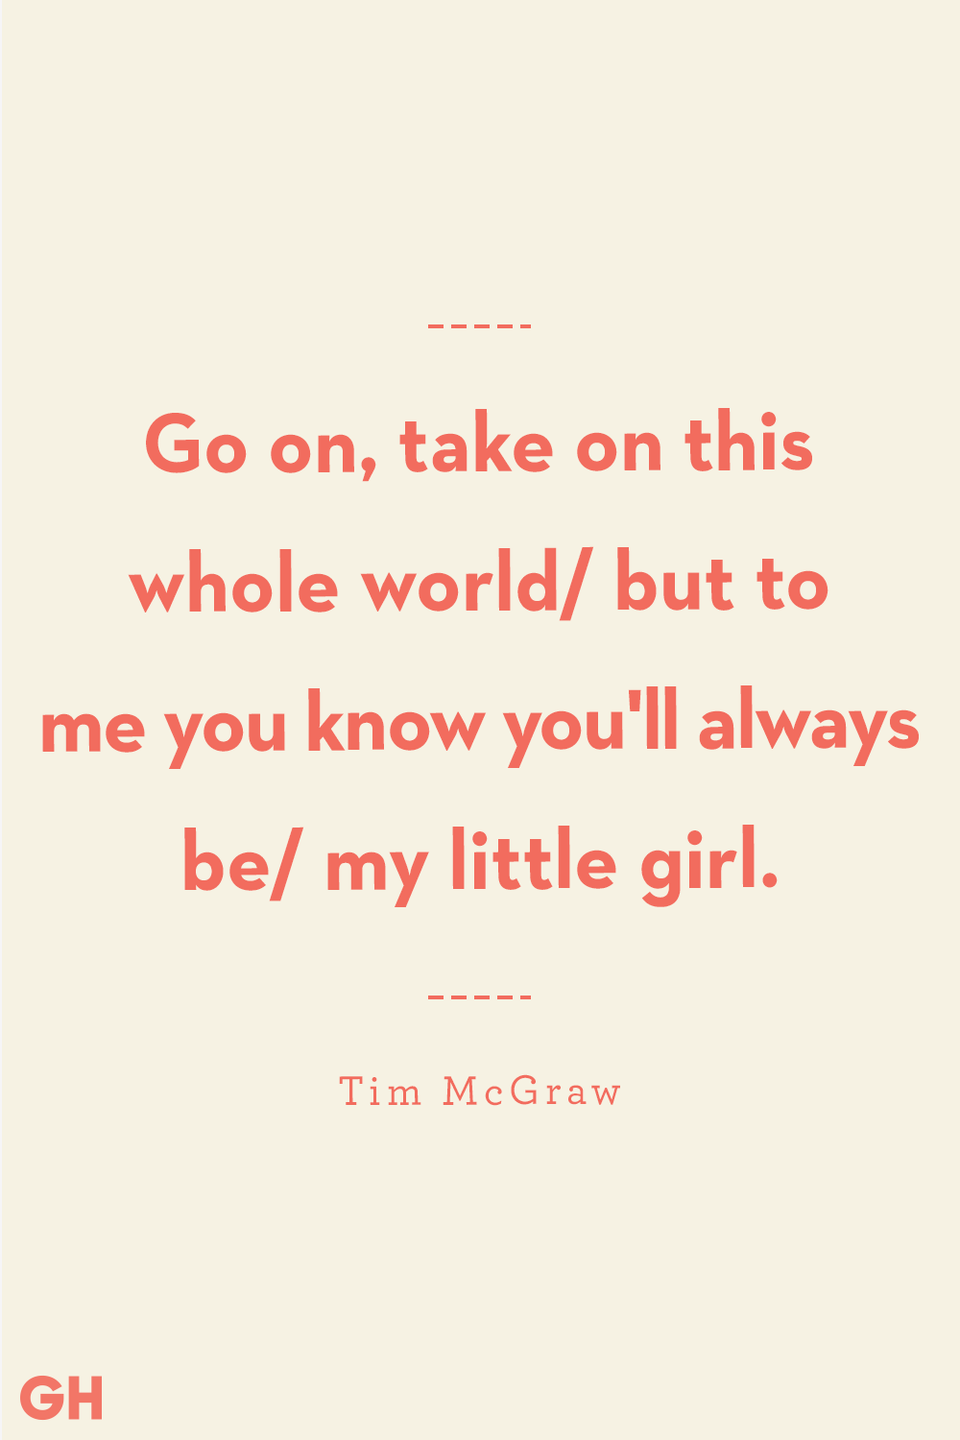 16) Tim McGraw